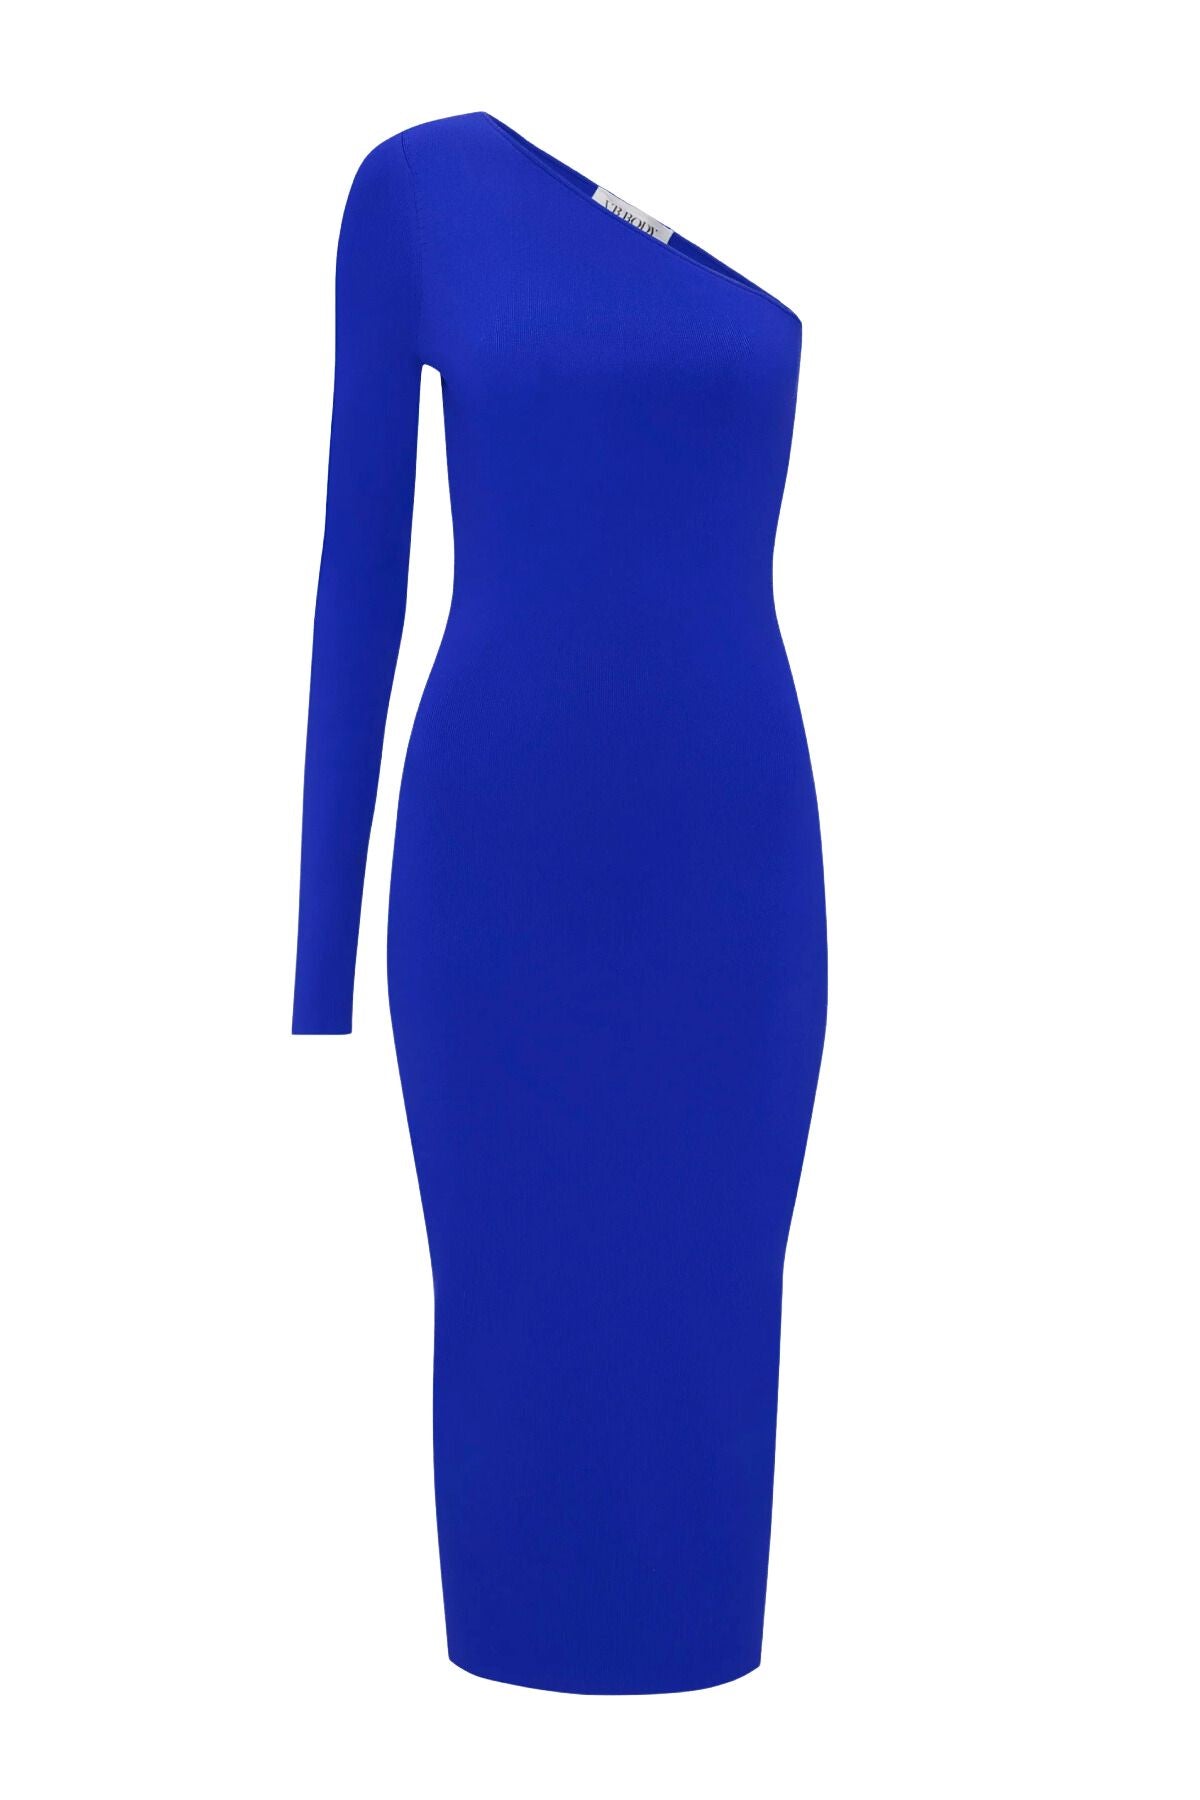 Victoria Beckham VB Body One Shoulder Midi Dress - Cobalt